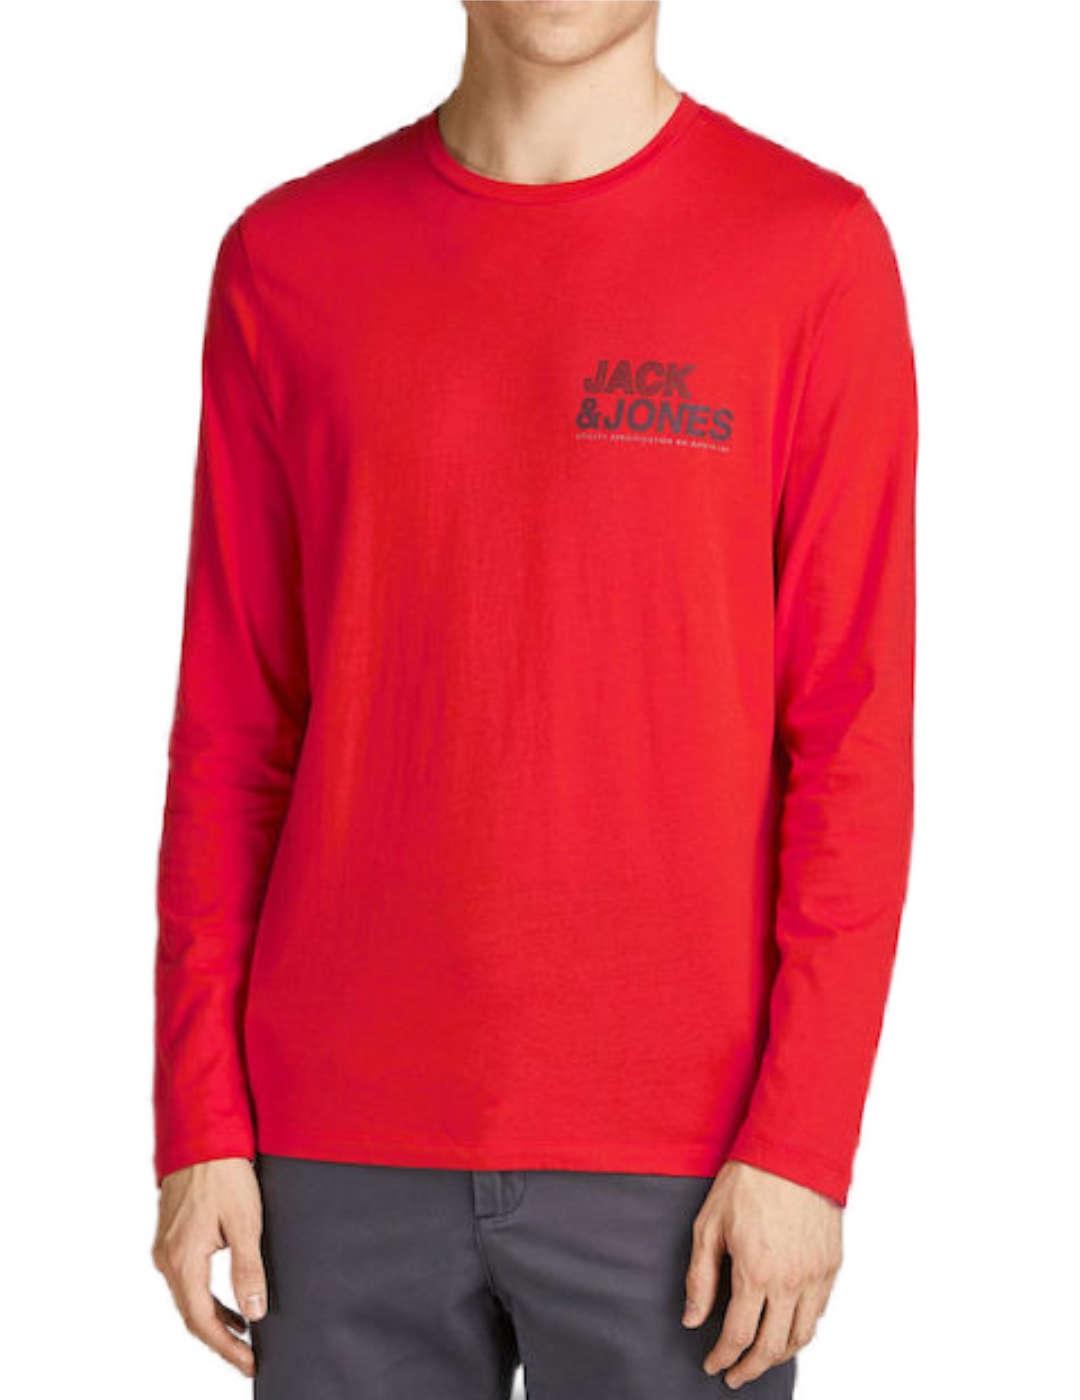 Camiseta Jack&Jones manga larga roja de hombre-z